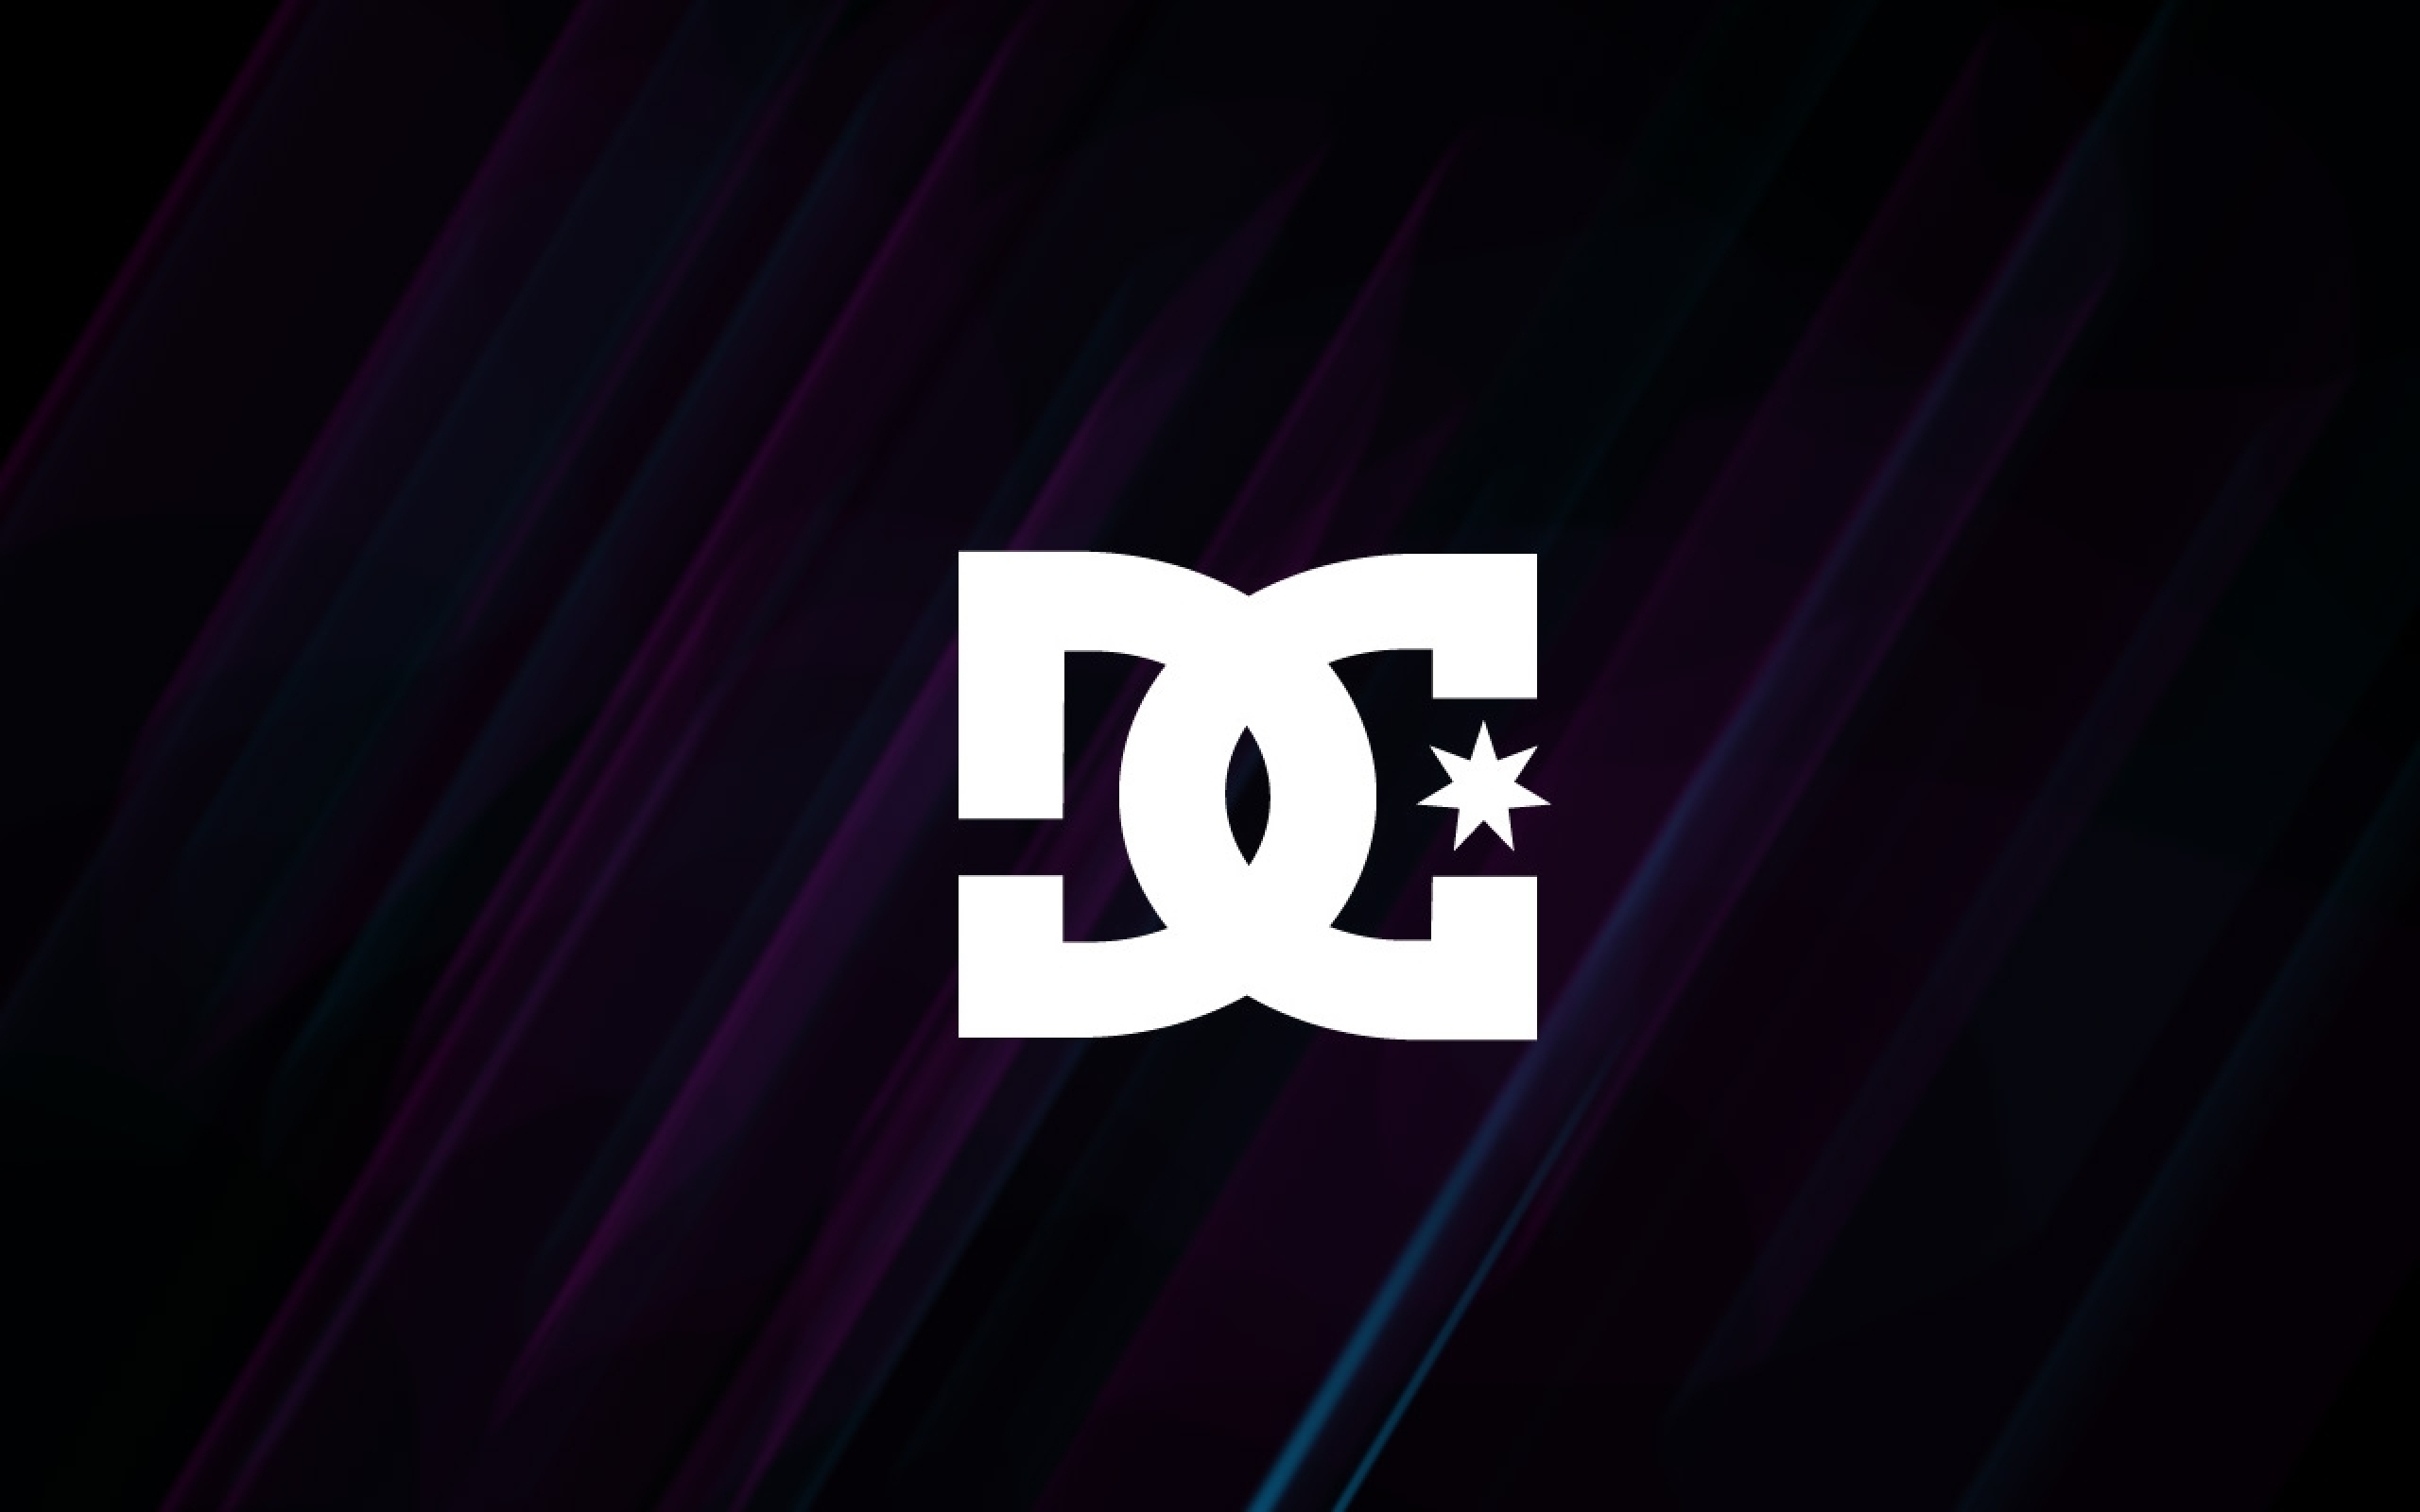 dc logo wallpaper,text,font,violet,purple,logo